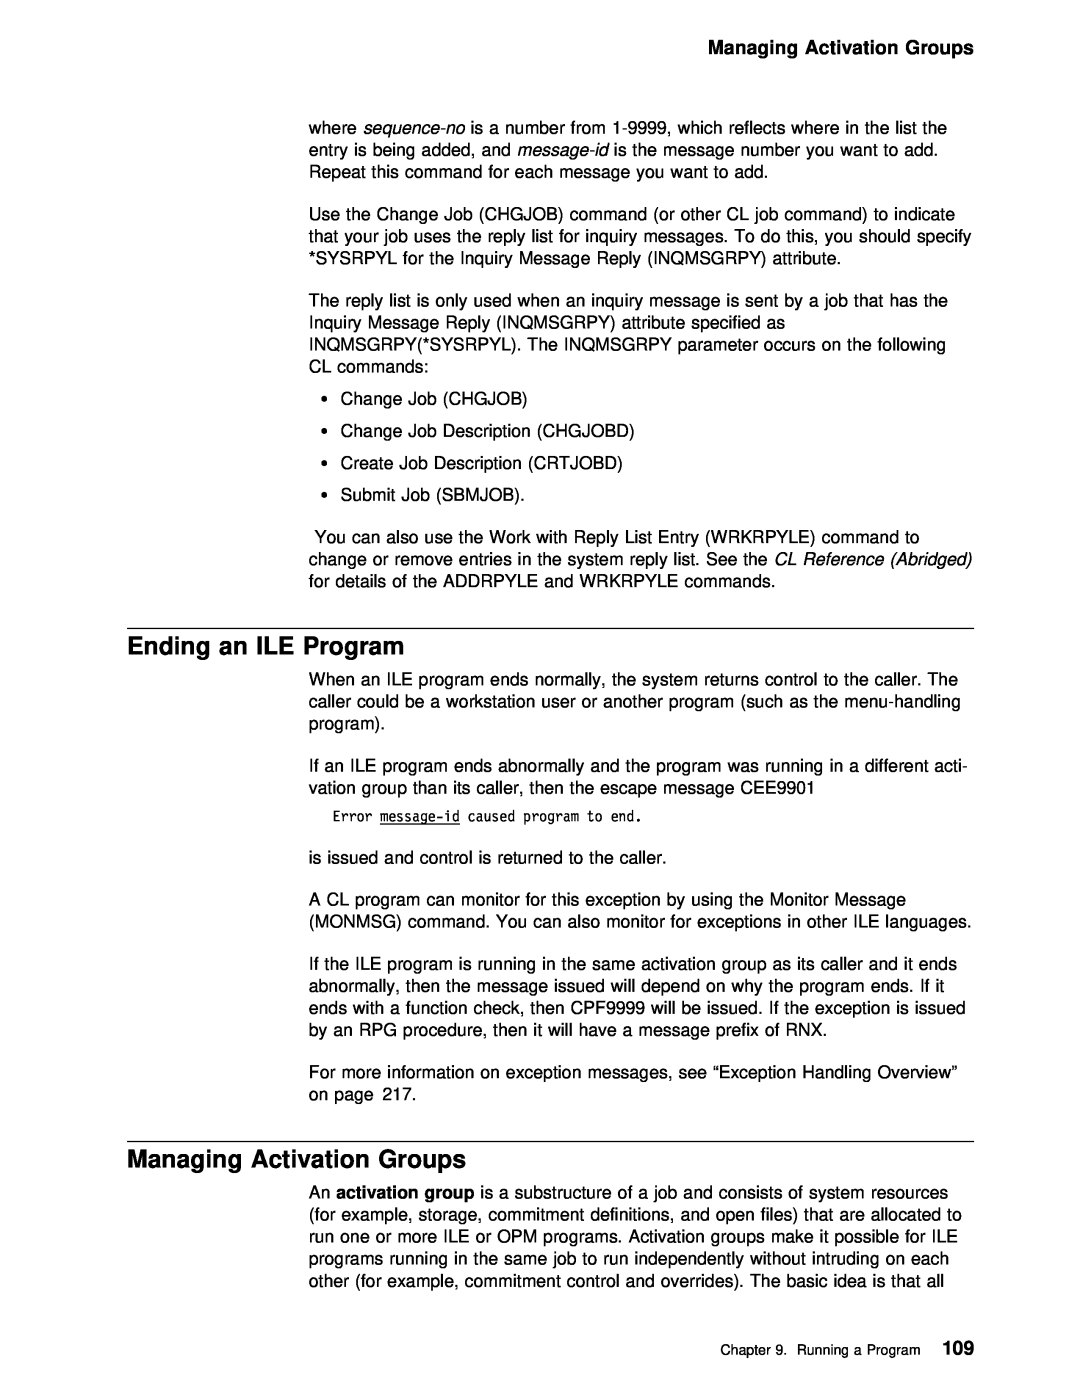 IBM AS/400 manual Ending an ILE Program, Groups, Managing Activation 